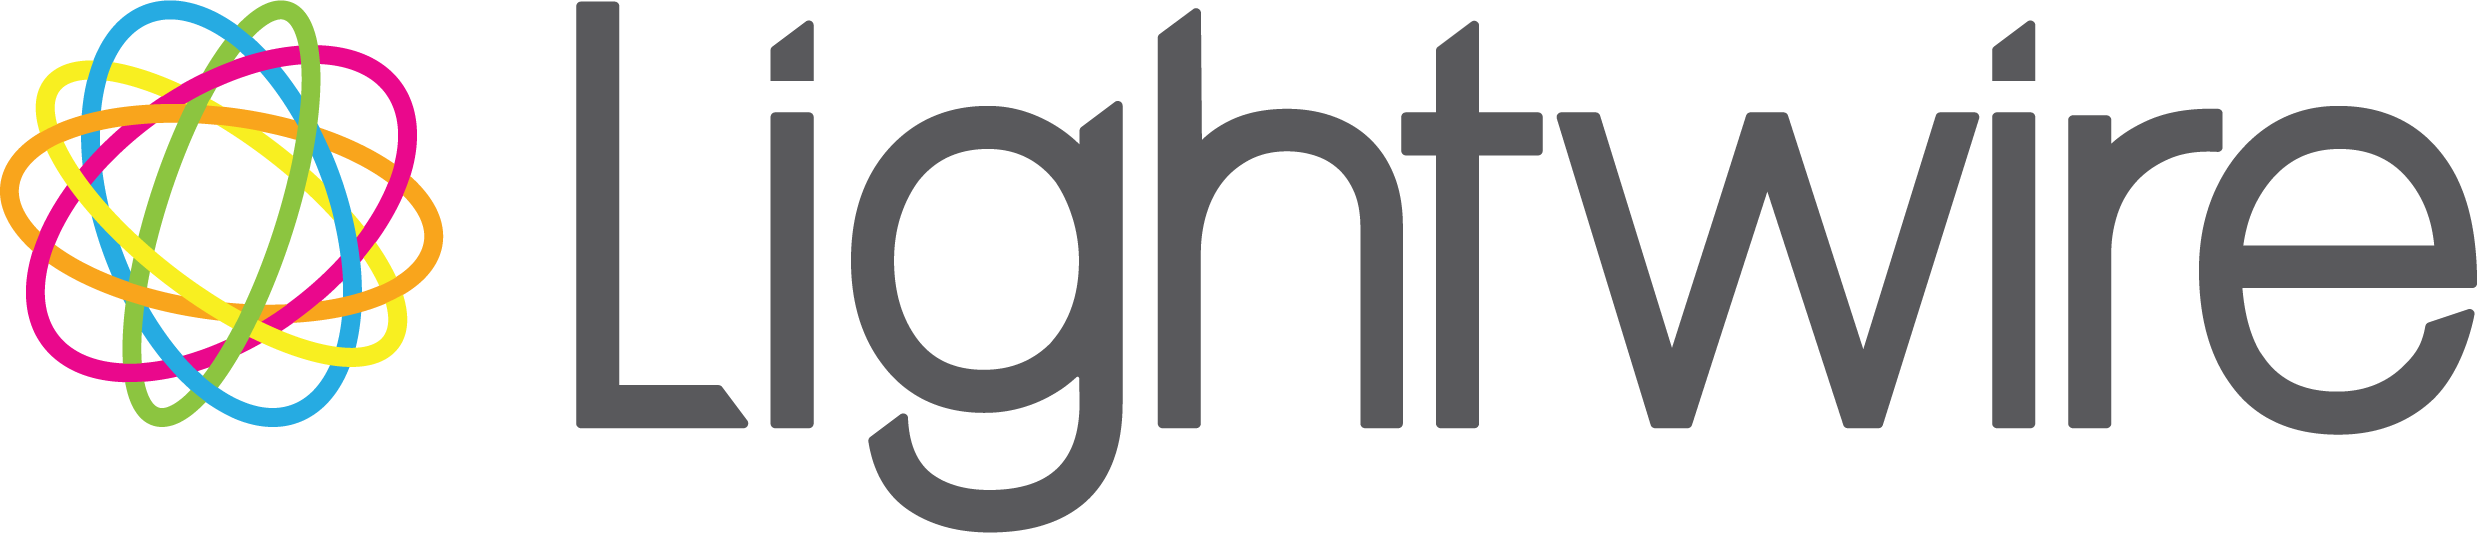 Lightwire Corporate Logo